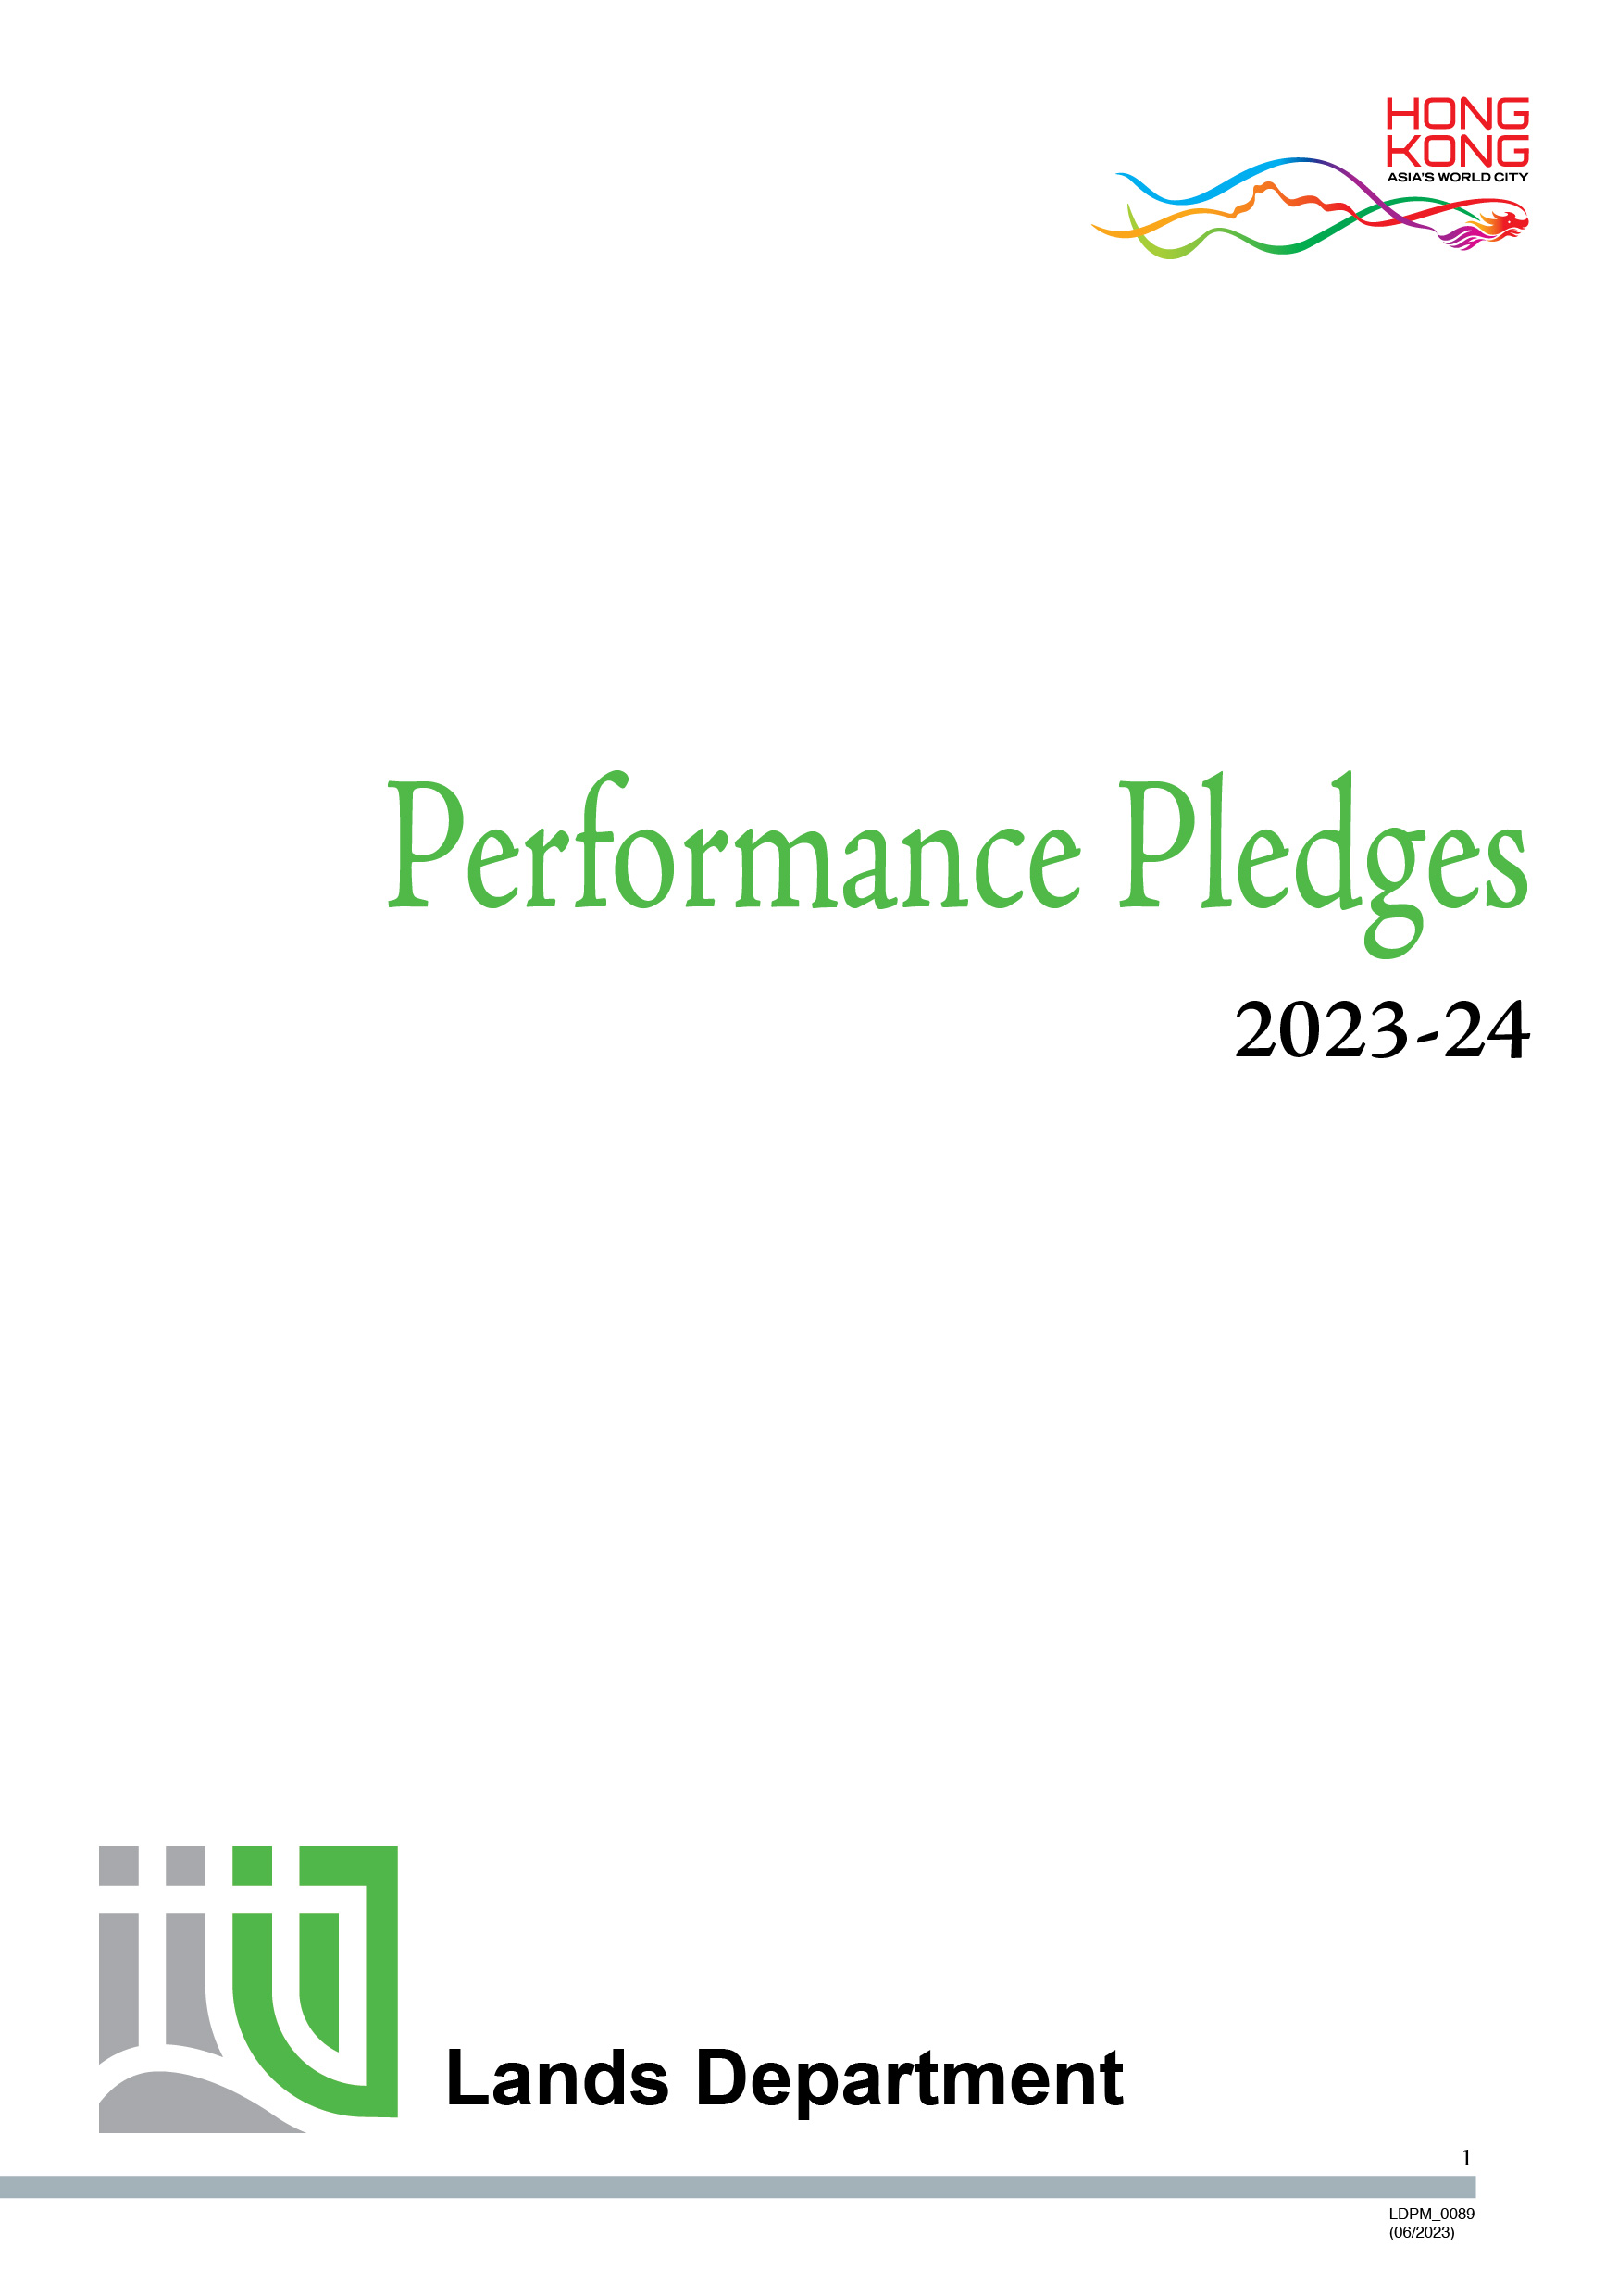 Performance Pledges (2023 - 24)